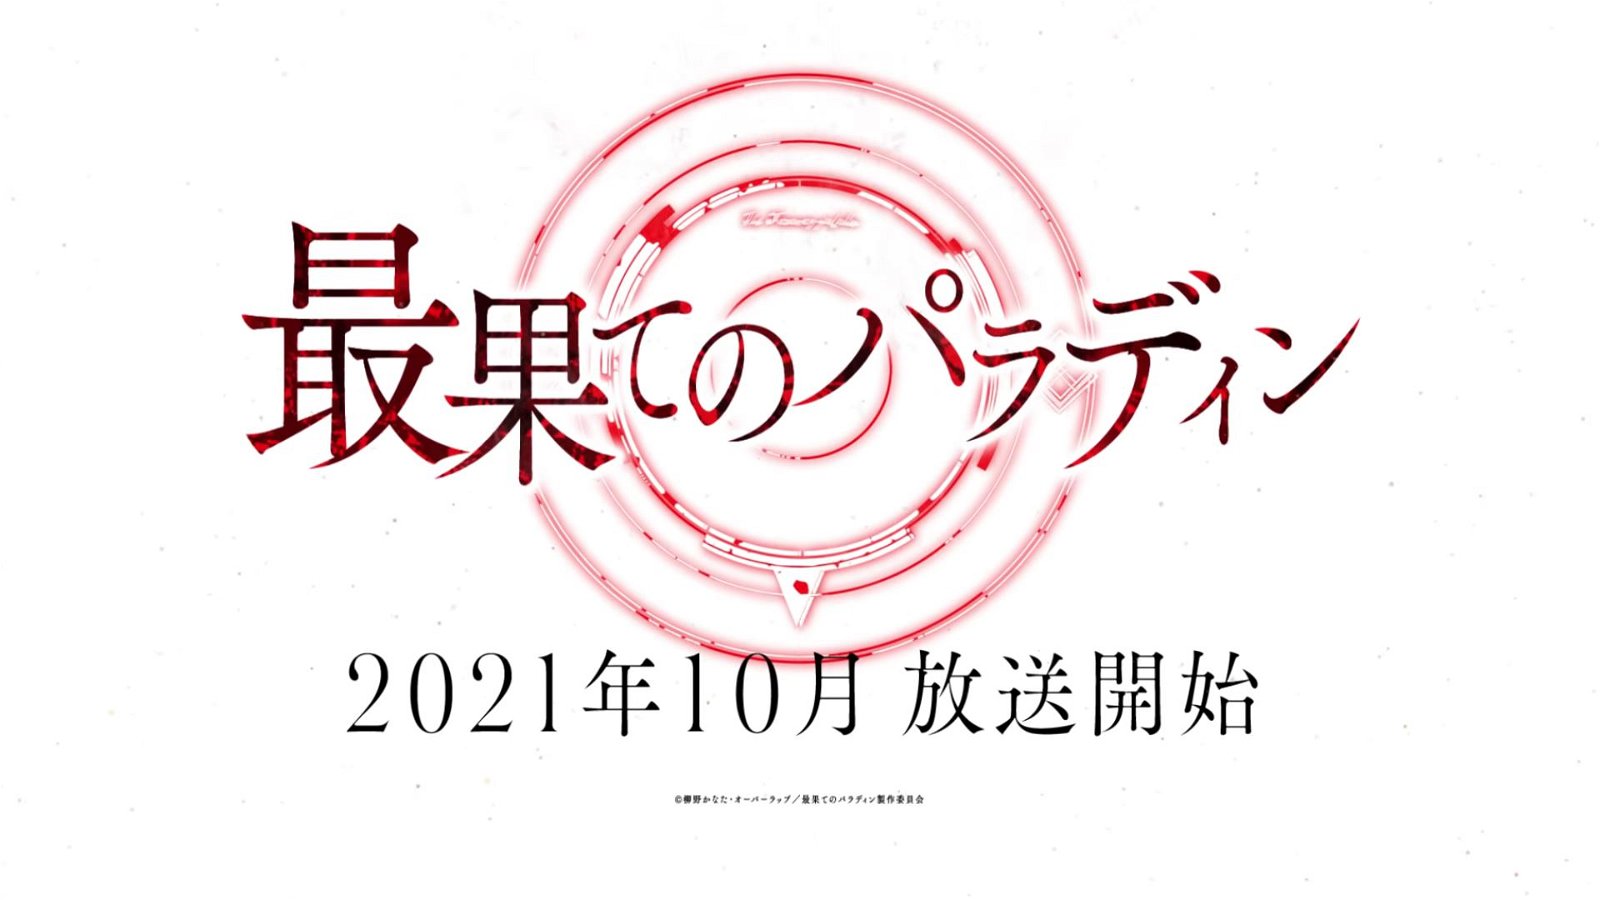 Light novel series Saihate no Paladin will get an anime adaption